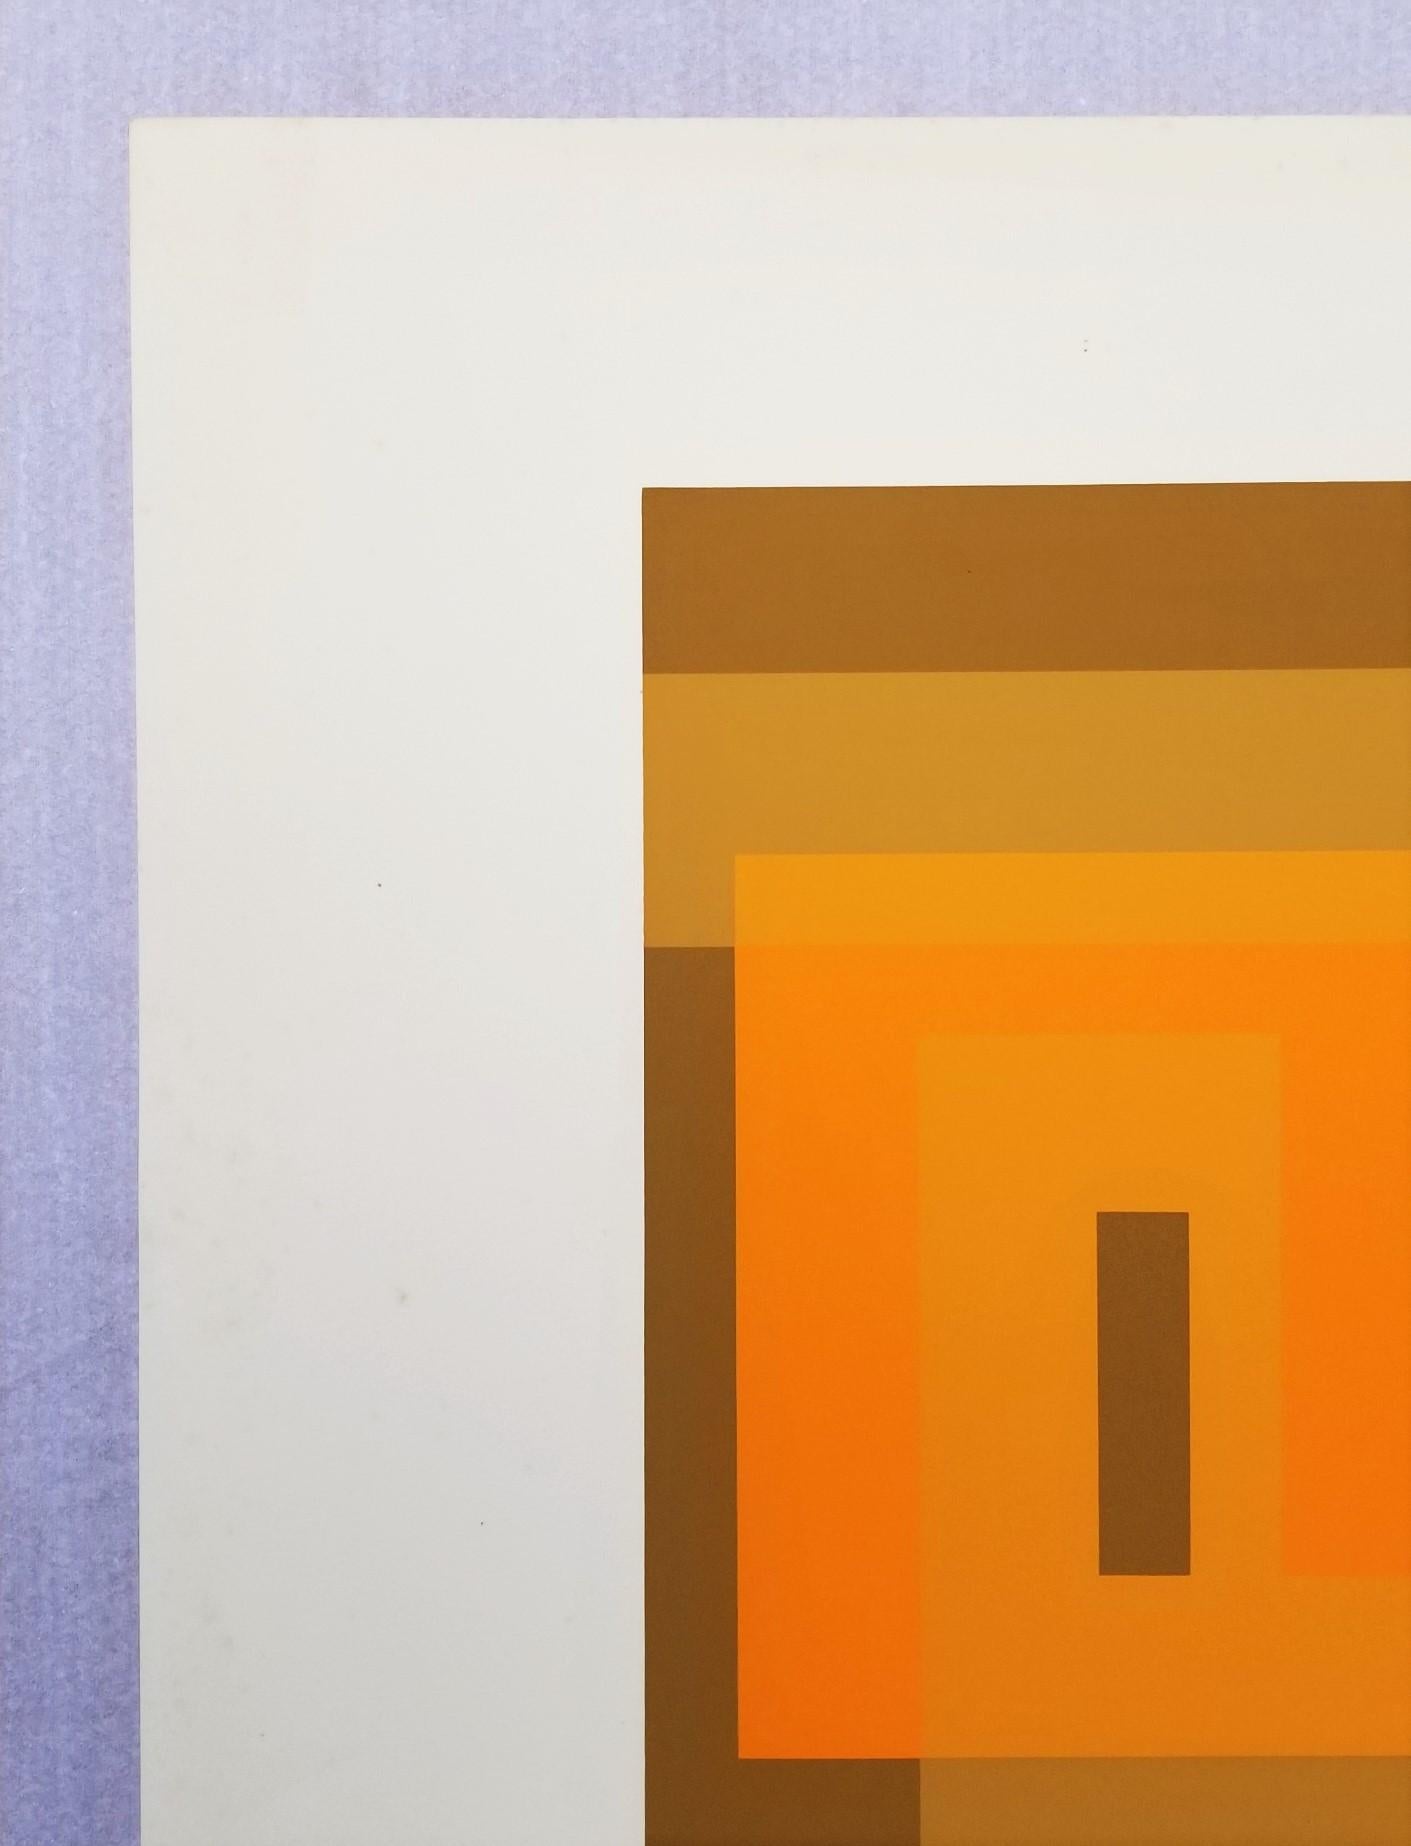 Red Orange Wall (1959) - Abstract Geometric Print by Josef Albers